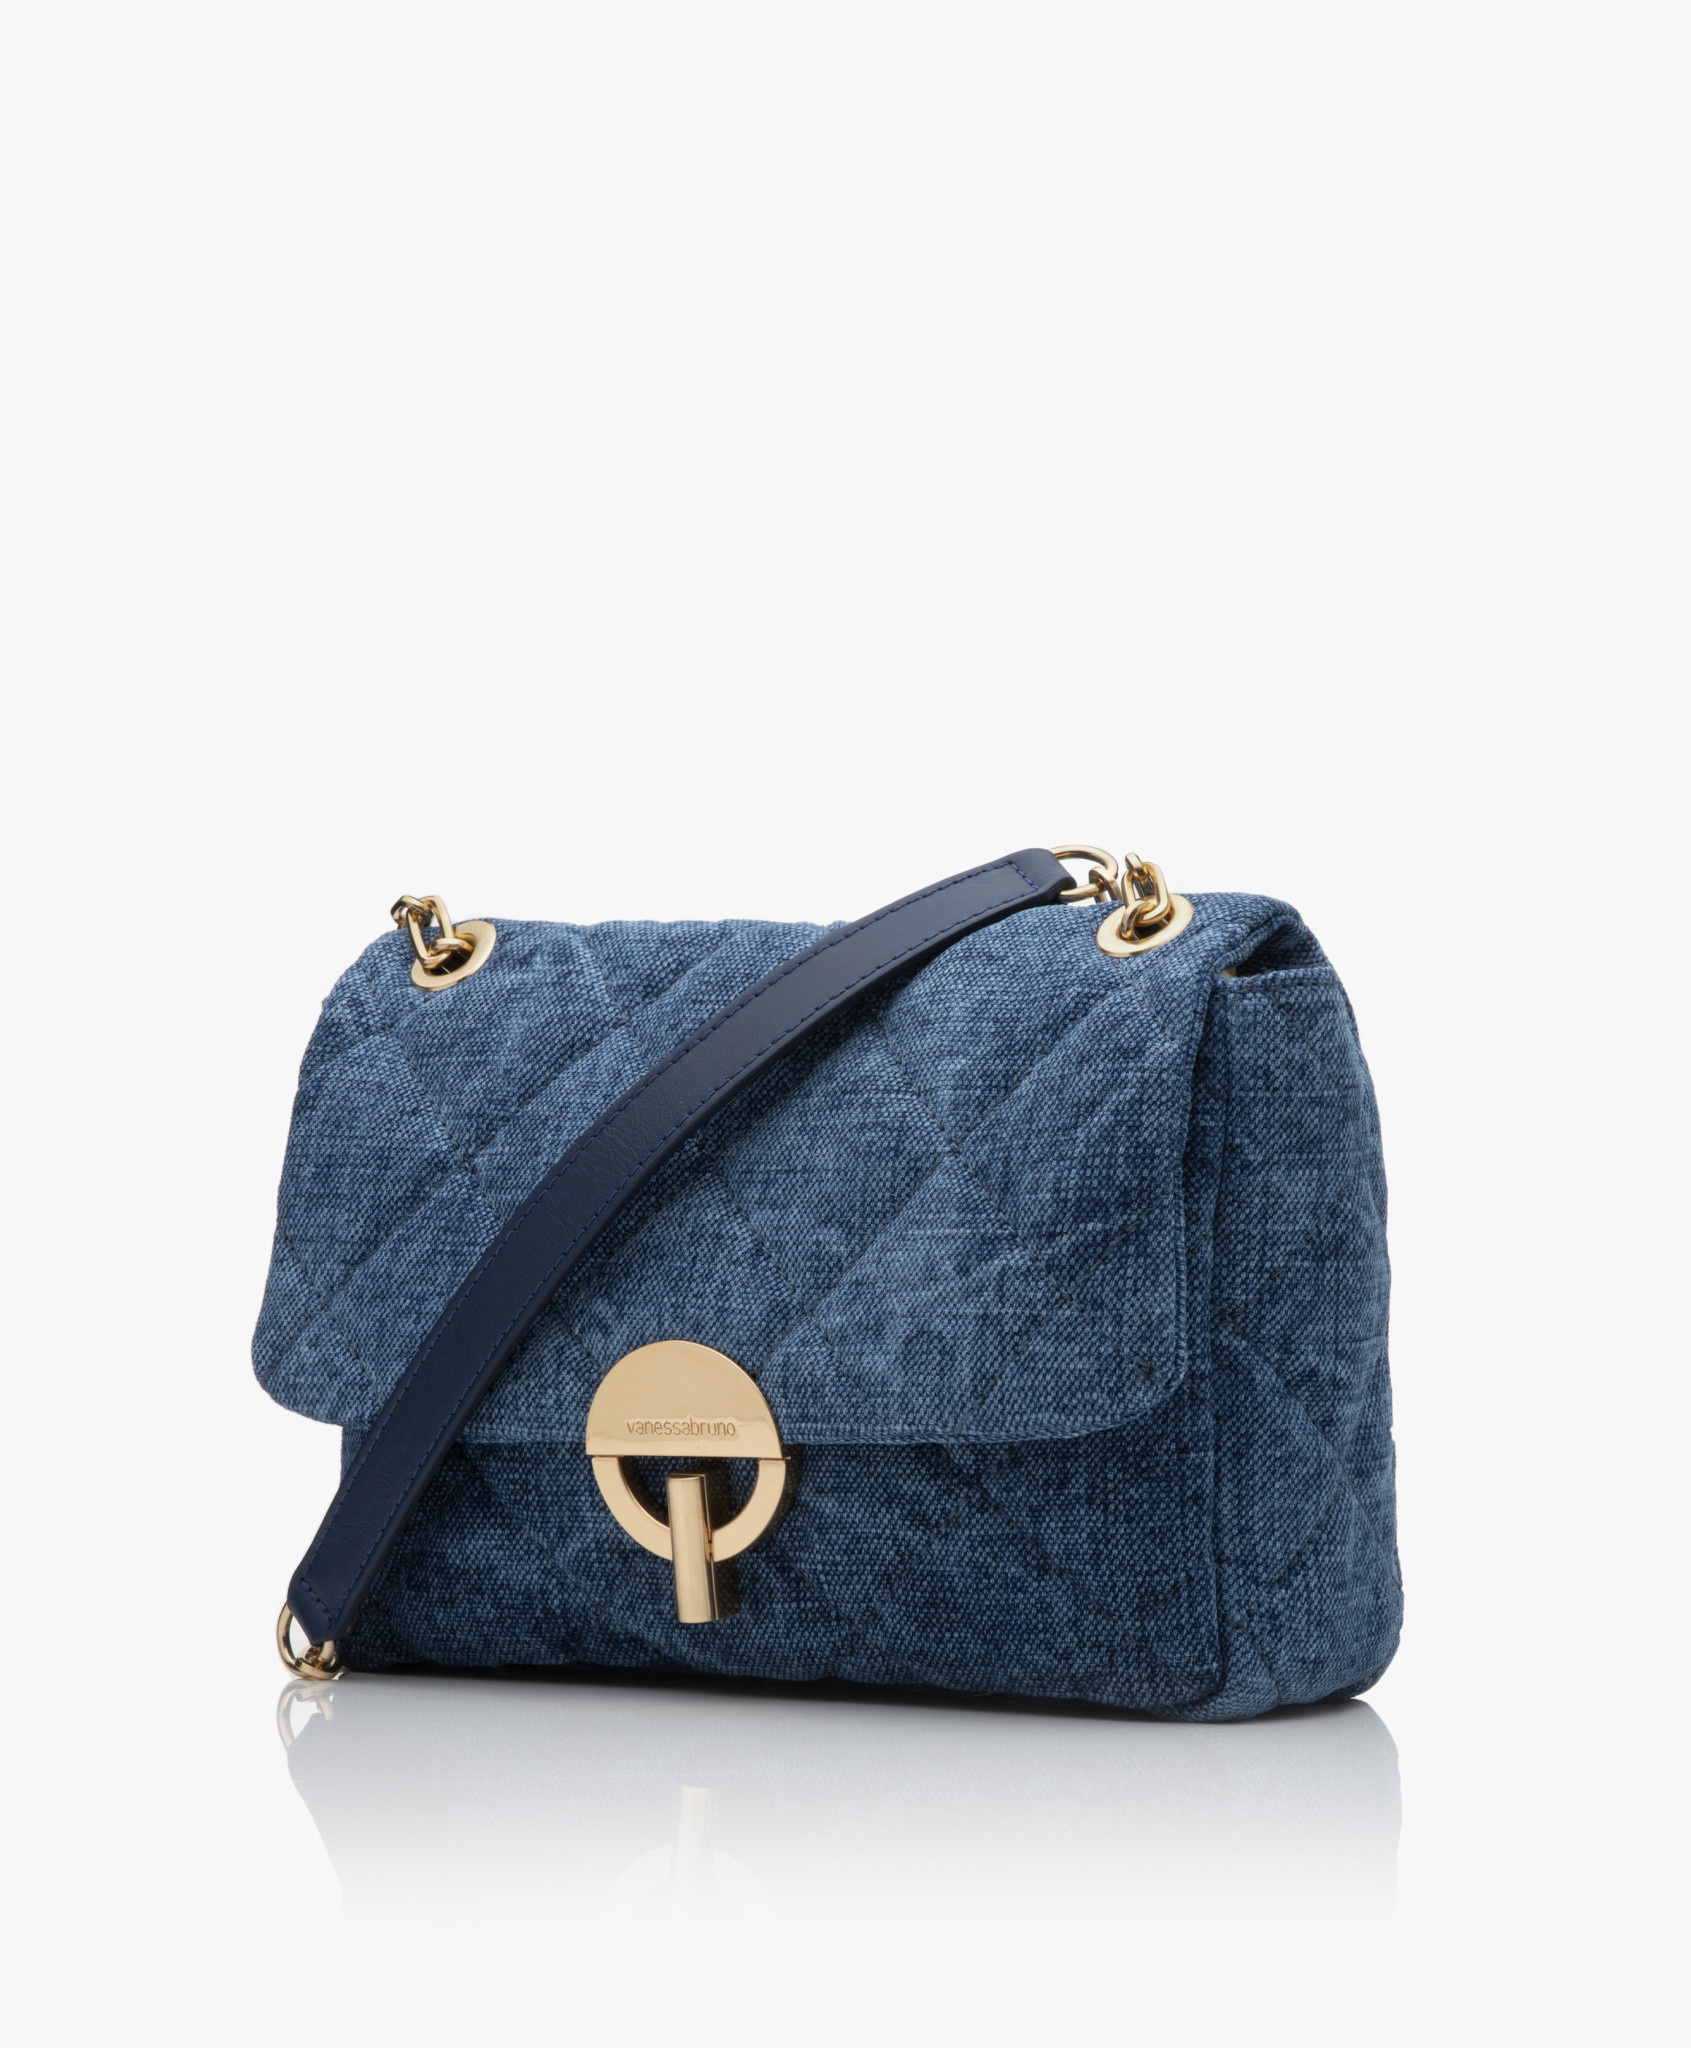 Moon handbag denim indigo blue-2